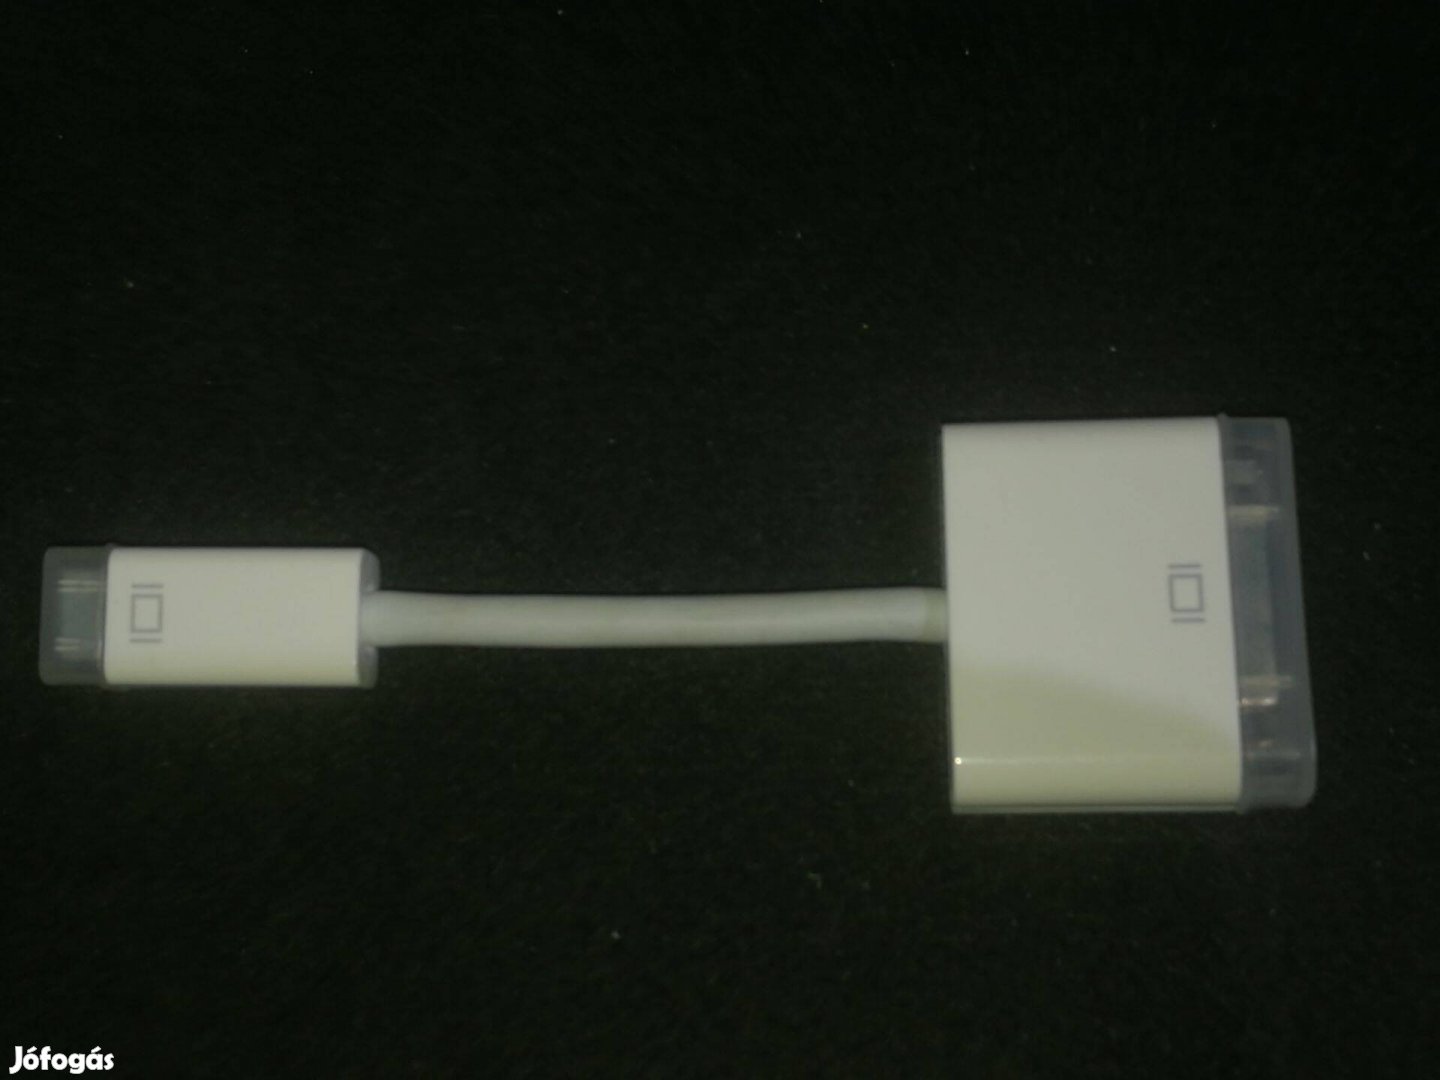 Apple Mini Displayport to DVI Adapter